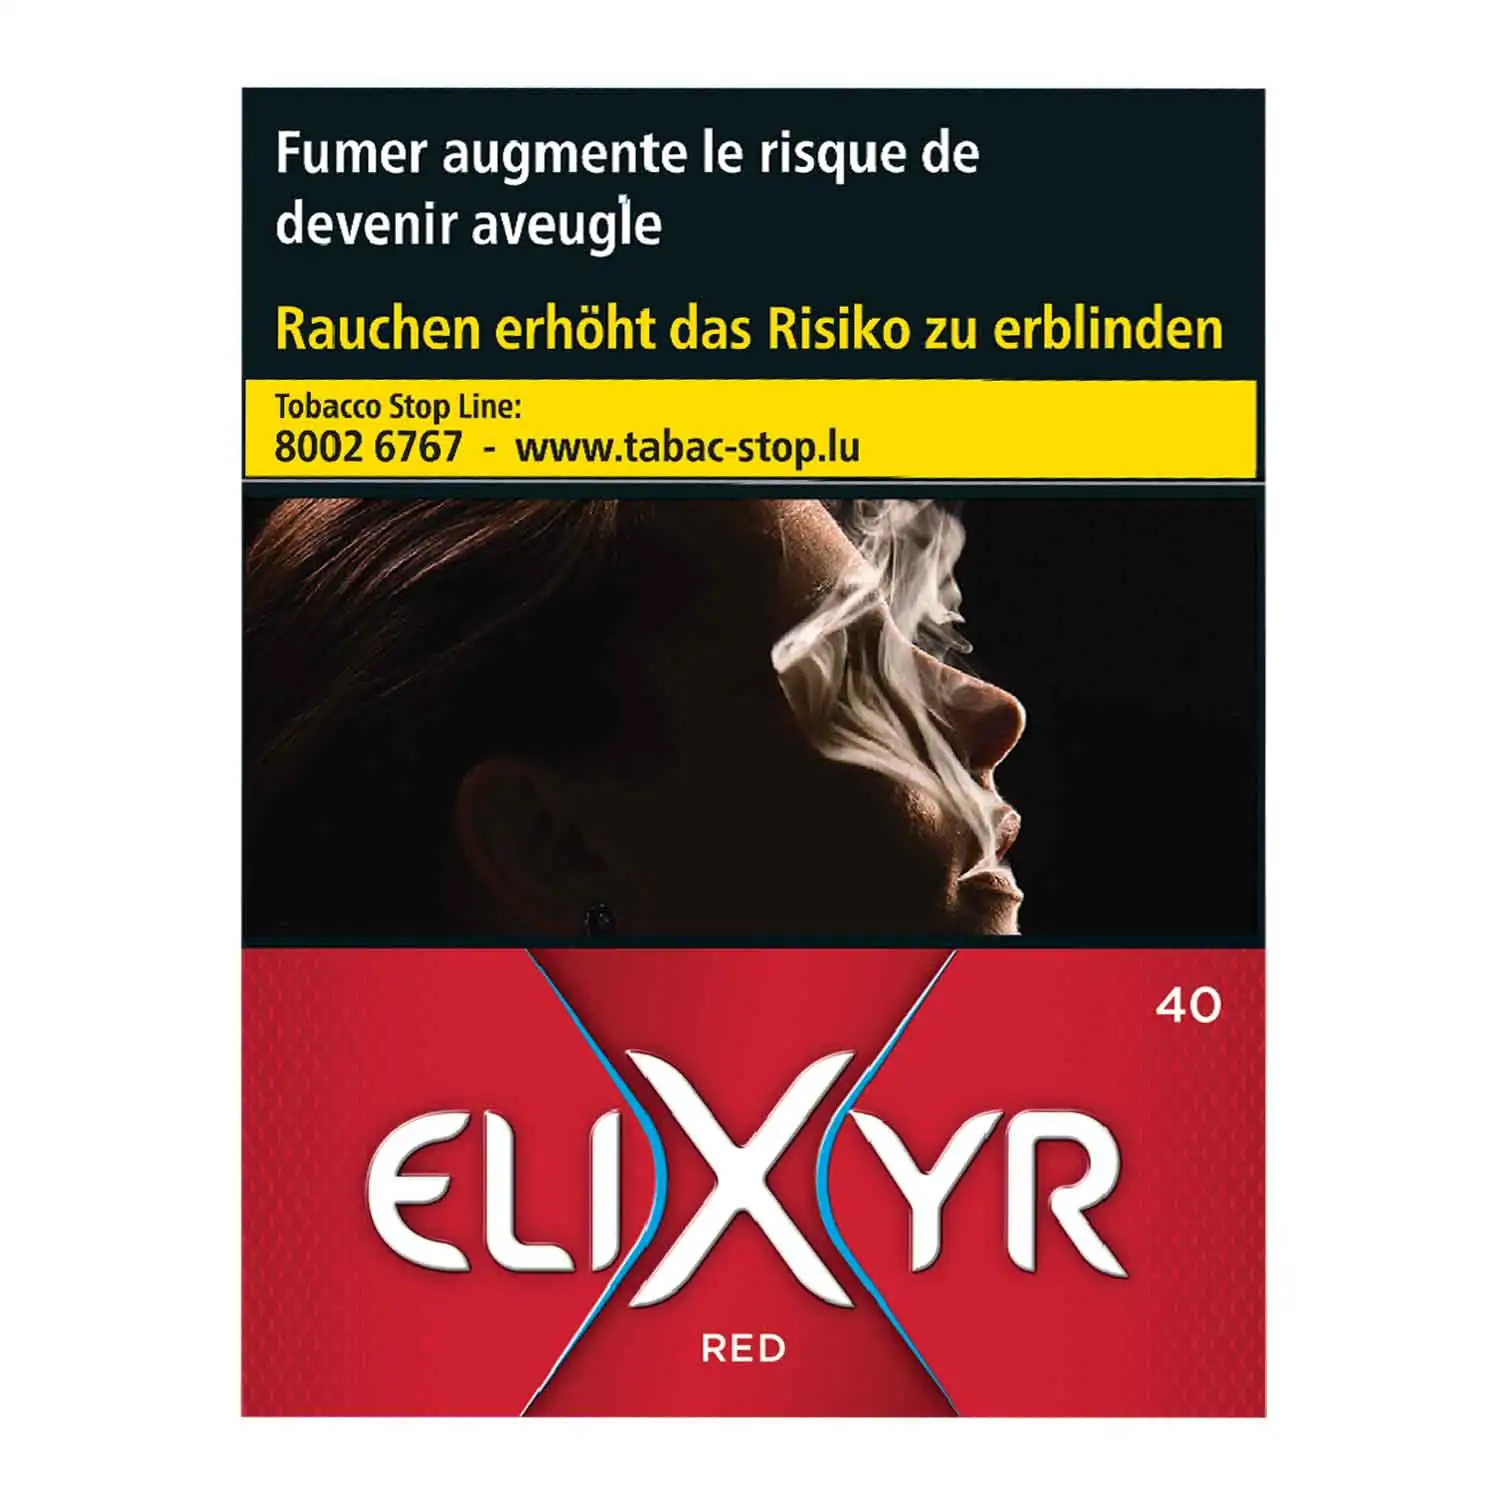 Elixyr rouge 40 - Buy at Real Tobacco